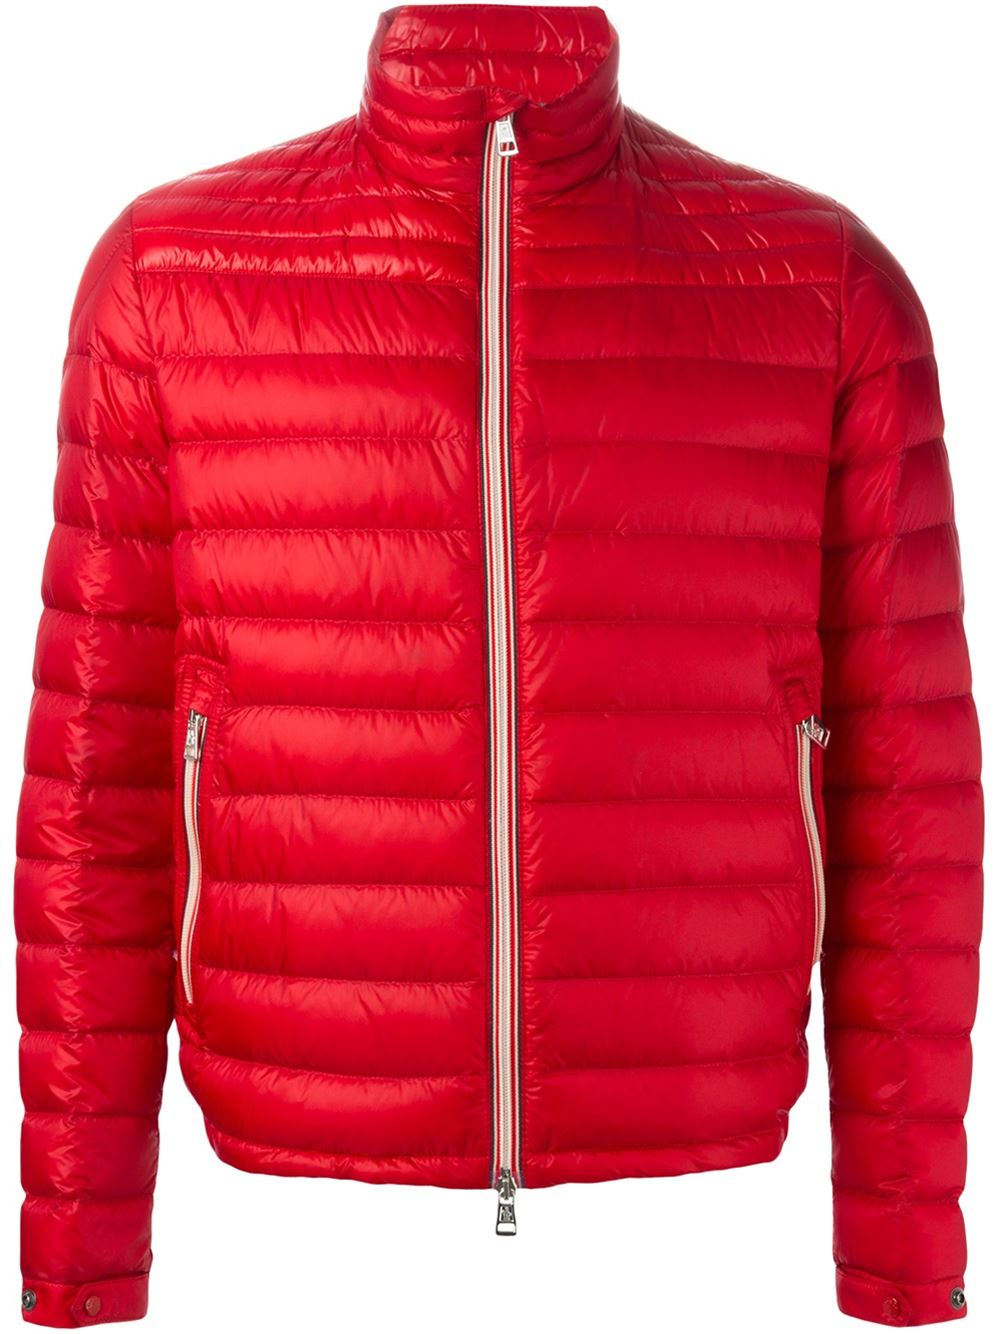 Lyst - Moncler 'Daniel' Padded Jacket in Red for Men